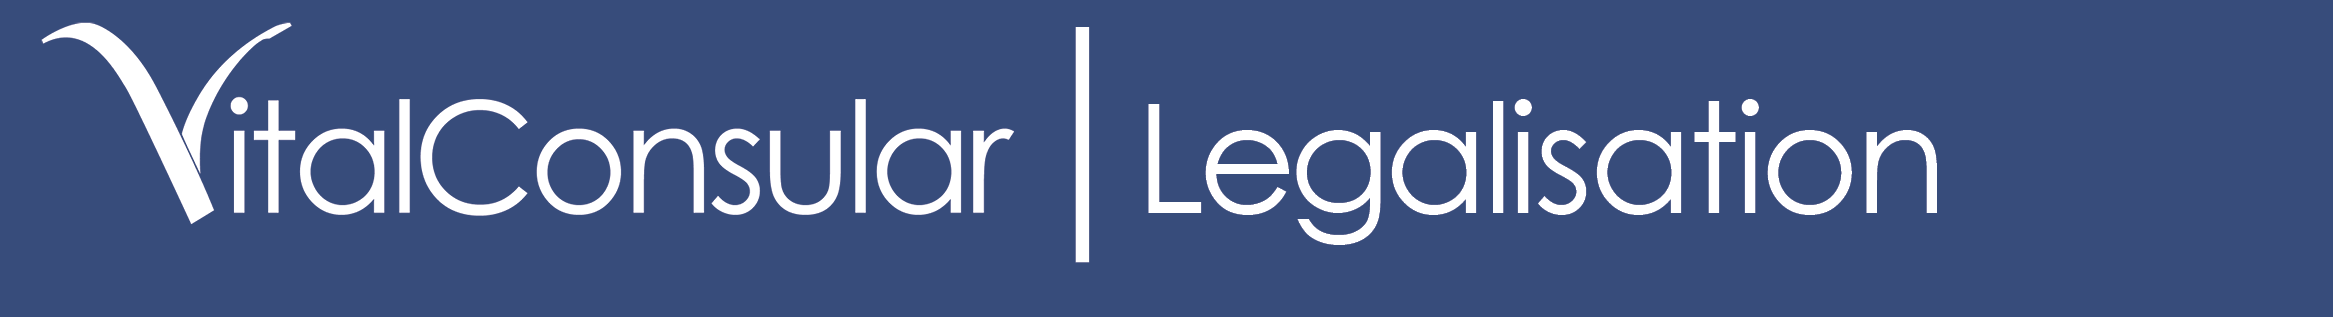 Vital Consular, document legalisation company, logo alongside the word 'Legalisation'